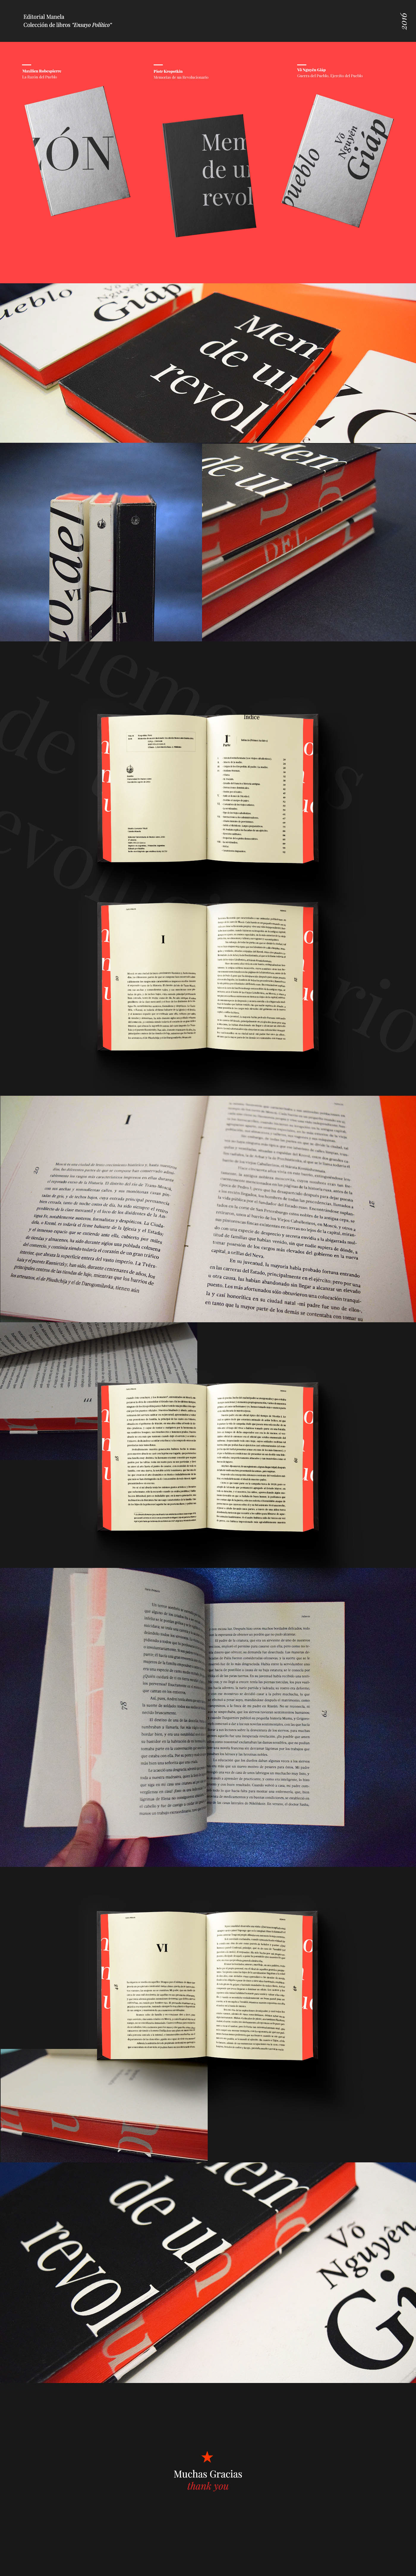 books libros Vo Nguyen Giap Robespierre Kropotkin marx editorial Politica political essay manela